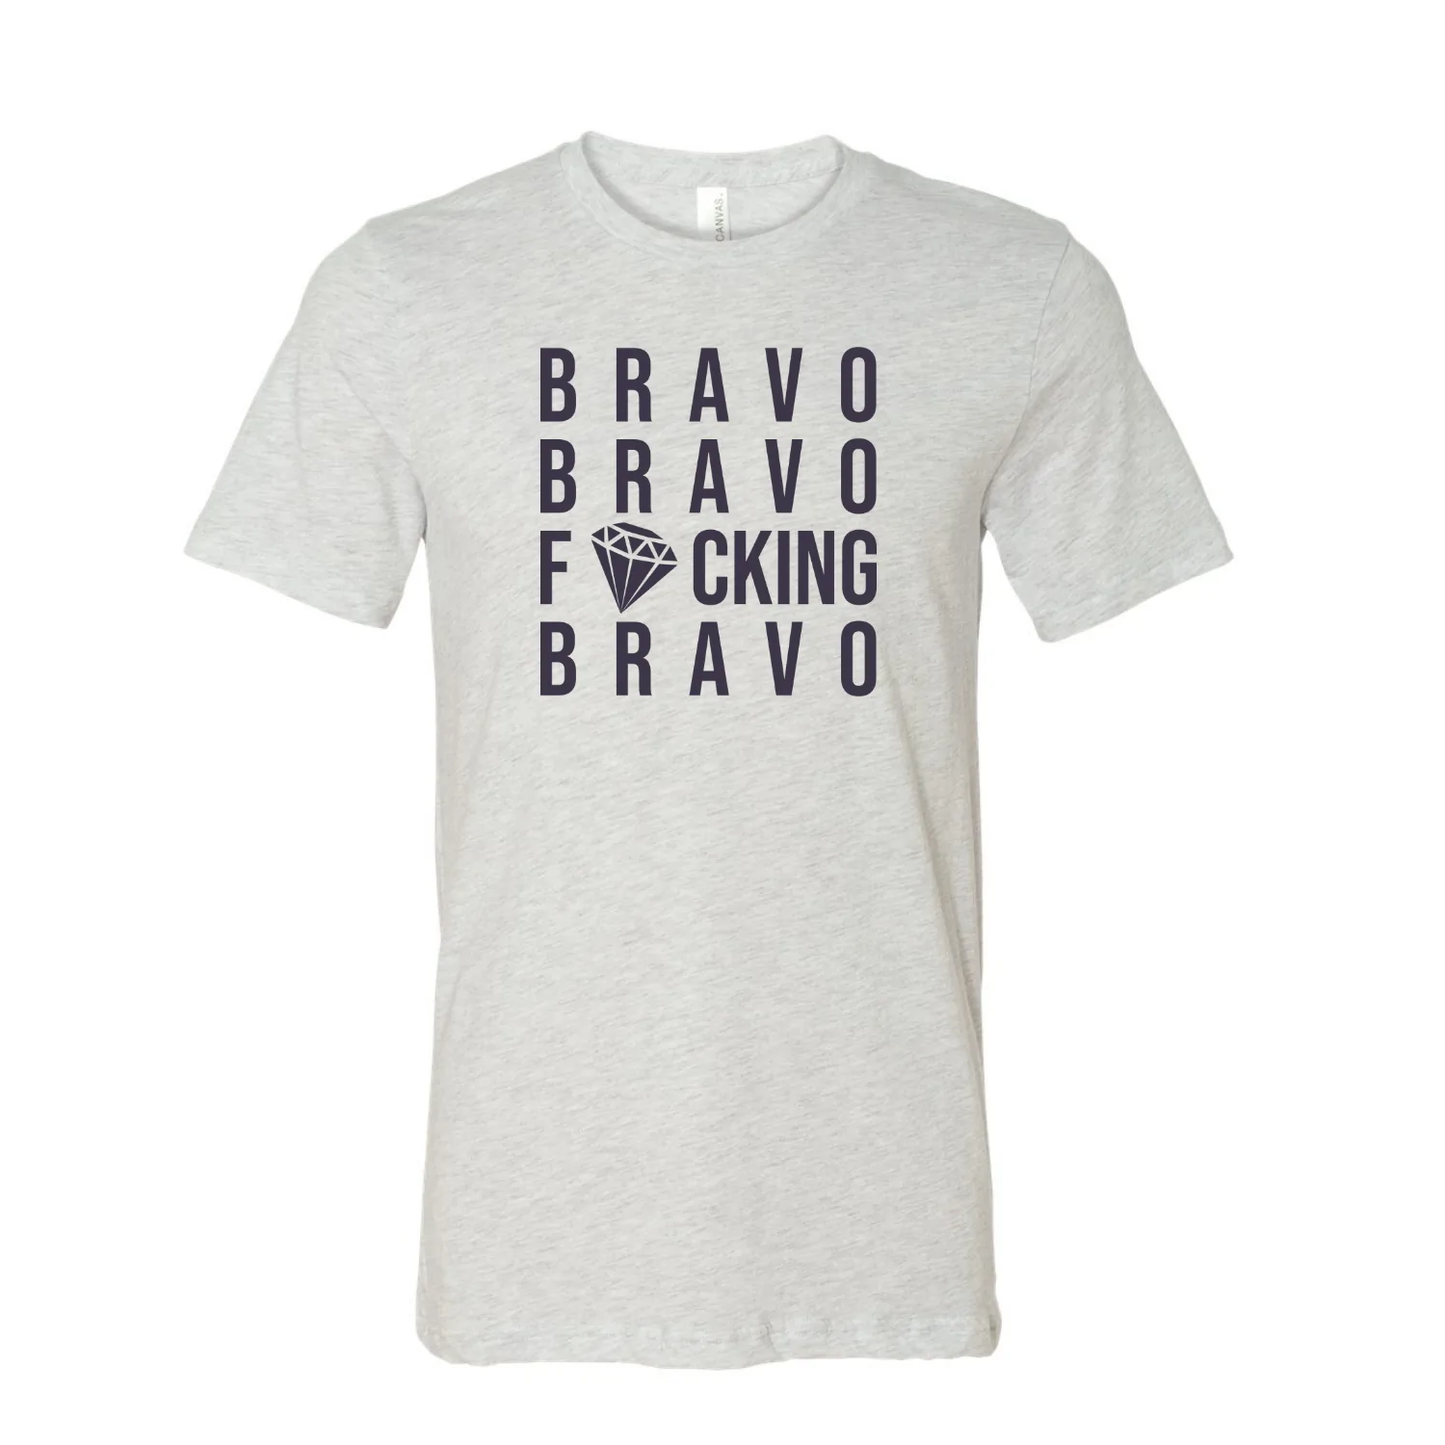 Bravo Bravo Fucking Bravo Short Sleeve Unisex Jersey Tee